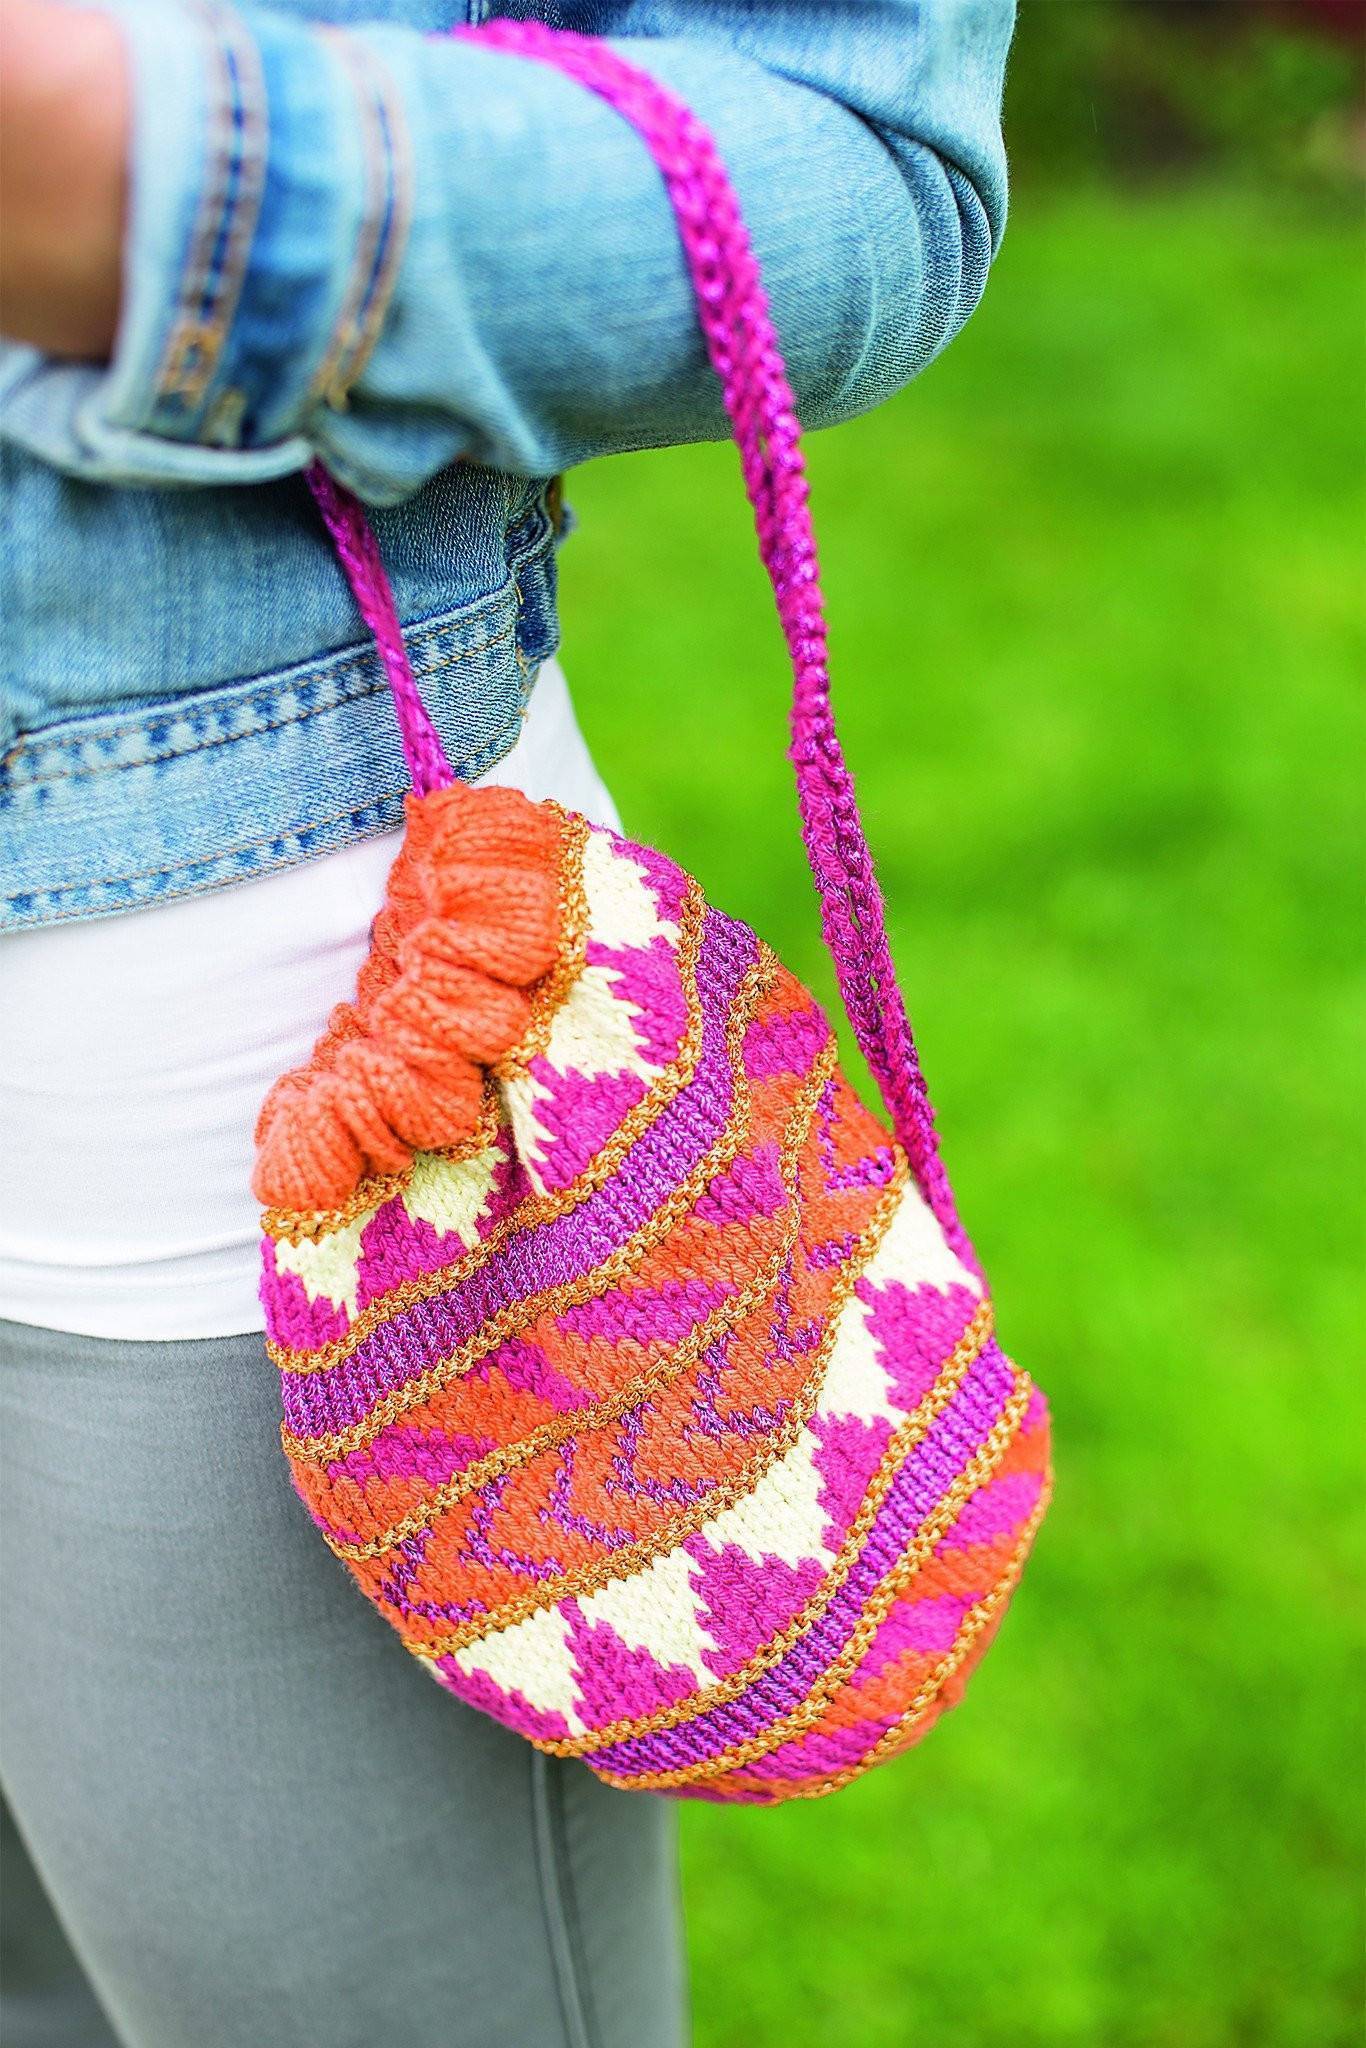 Patterned Drawstring Bag Knitting Pattern | The Knitting ...